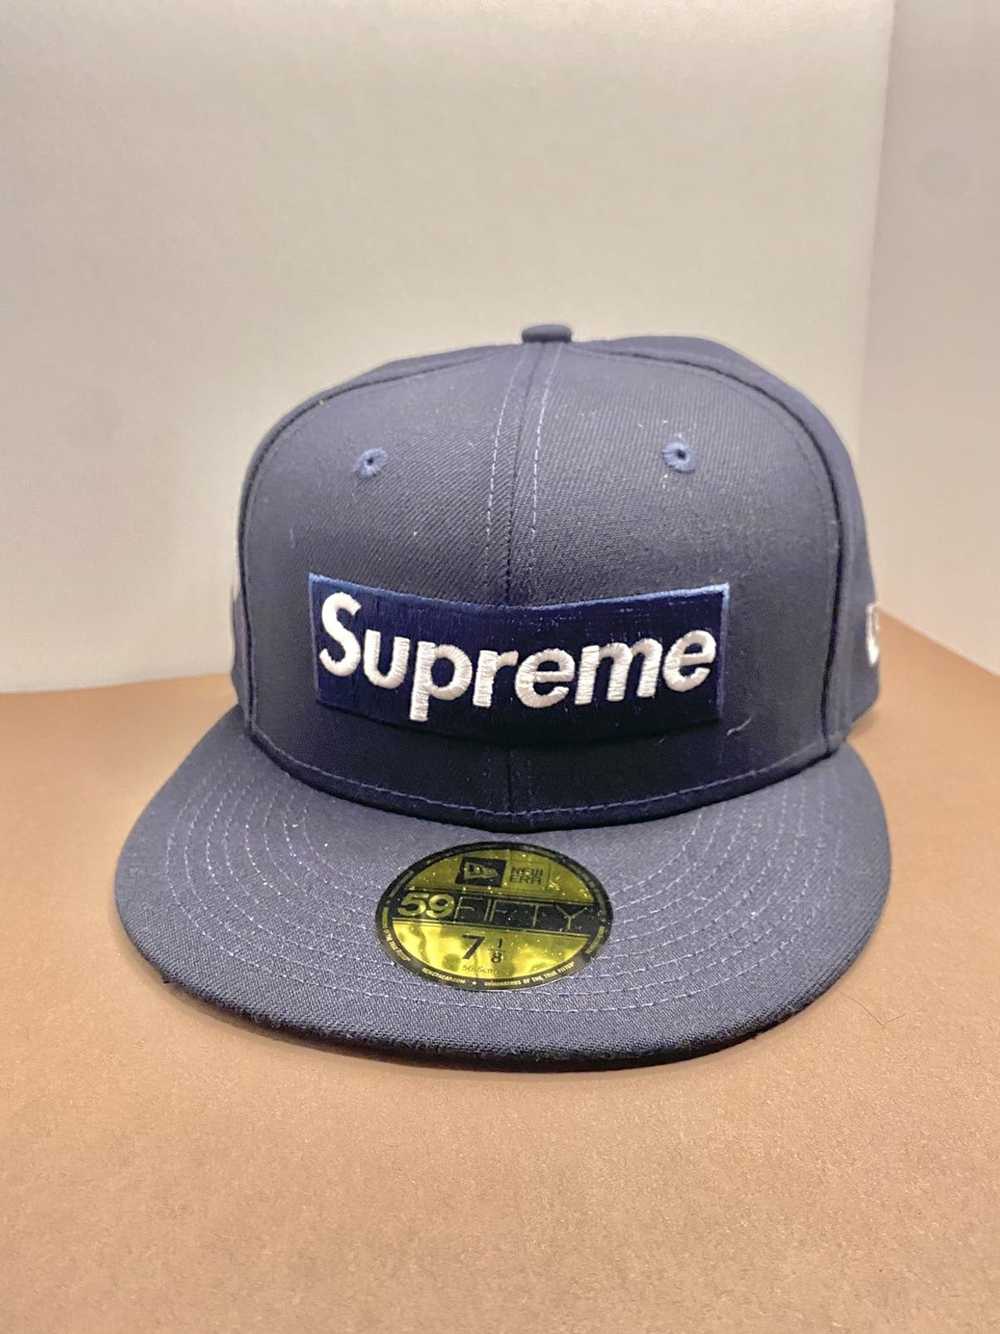 Supreme Supreme hat - image 1